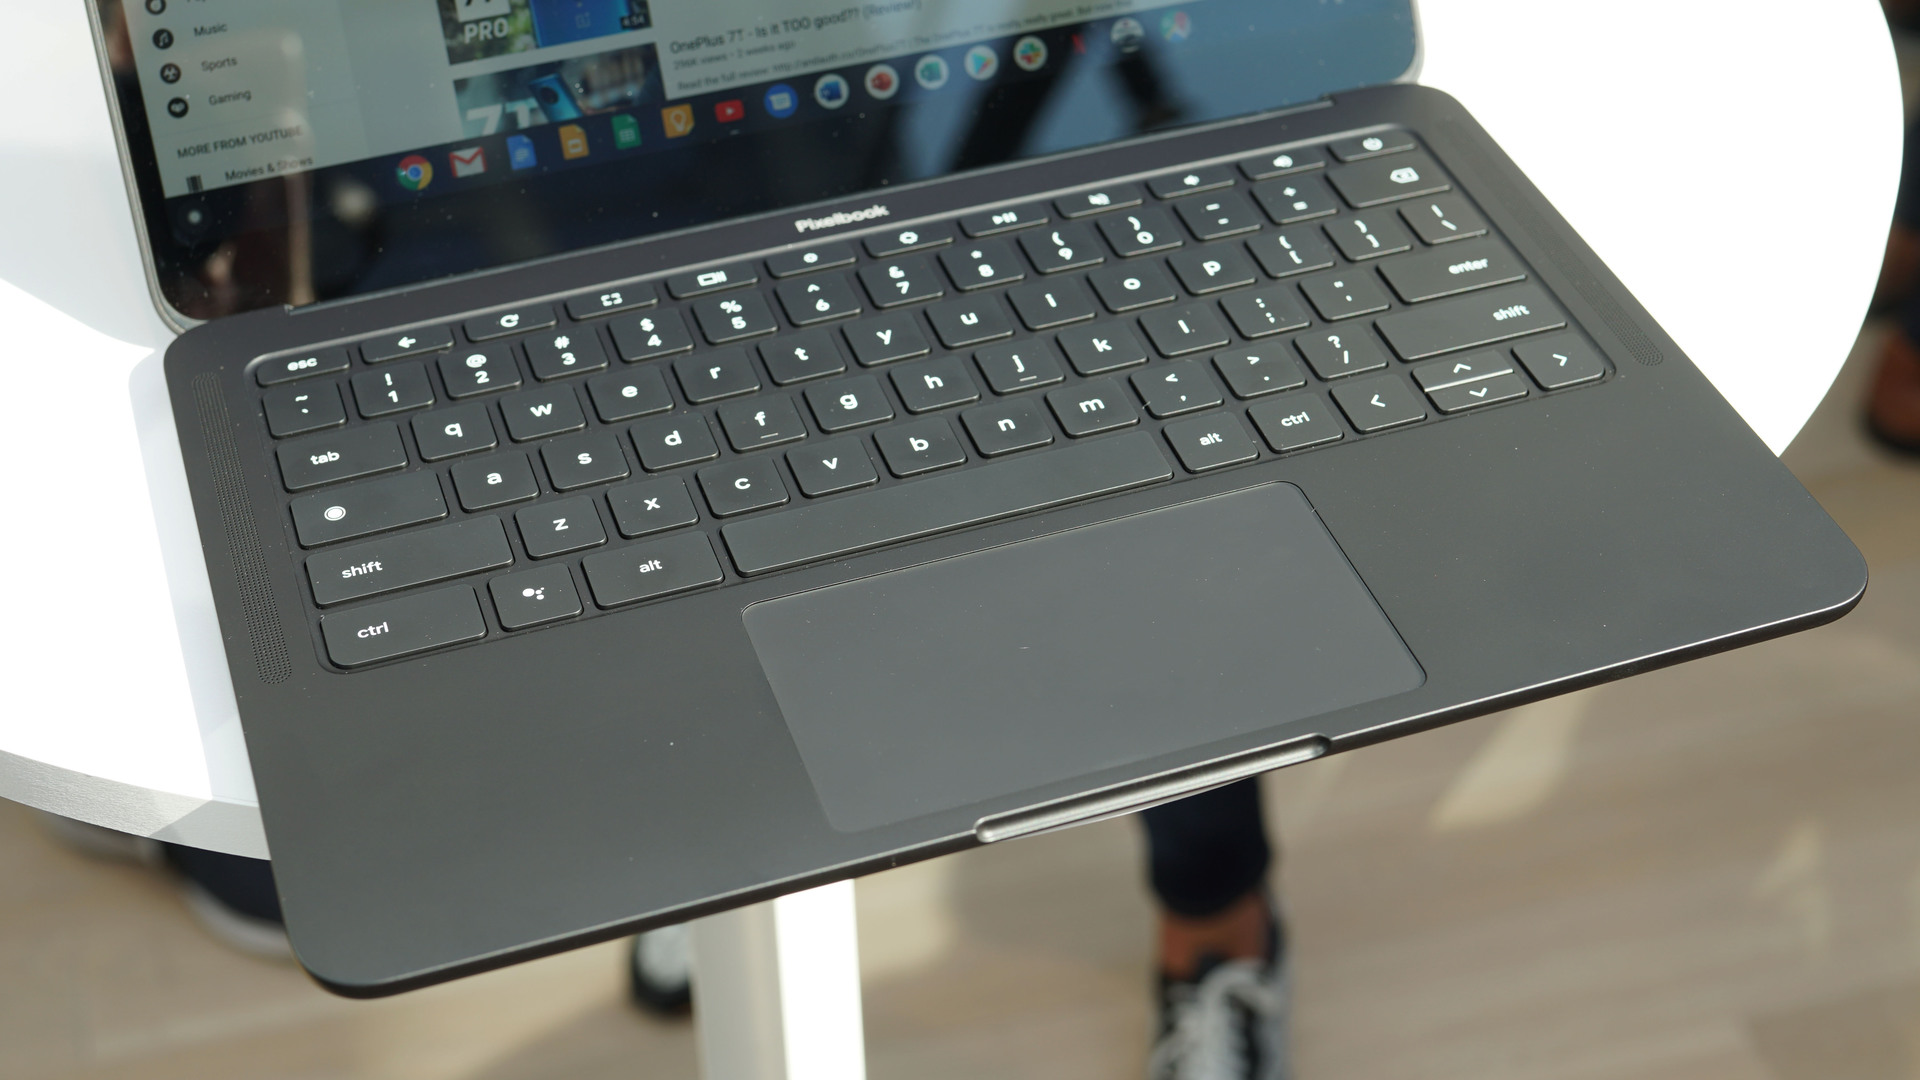 Google Pixelbook Go keyboard in black